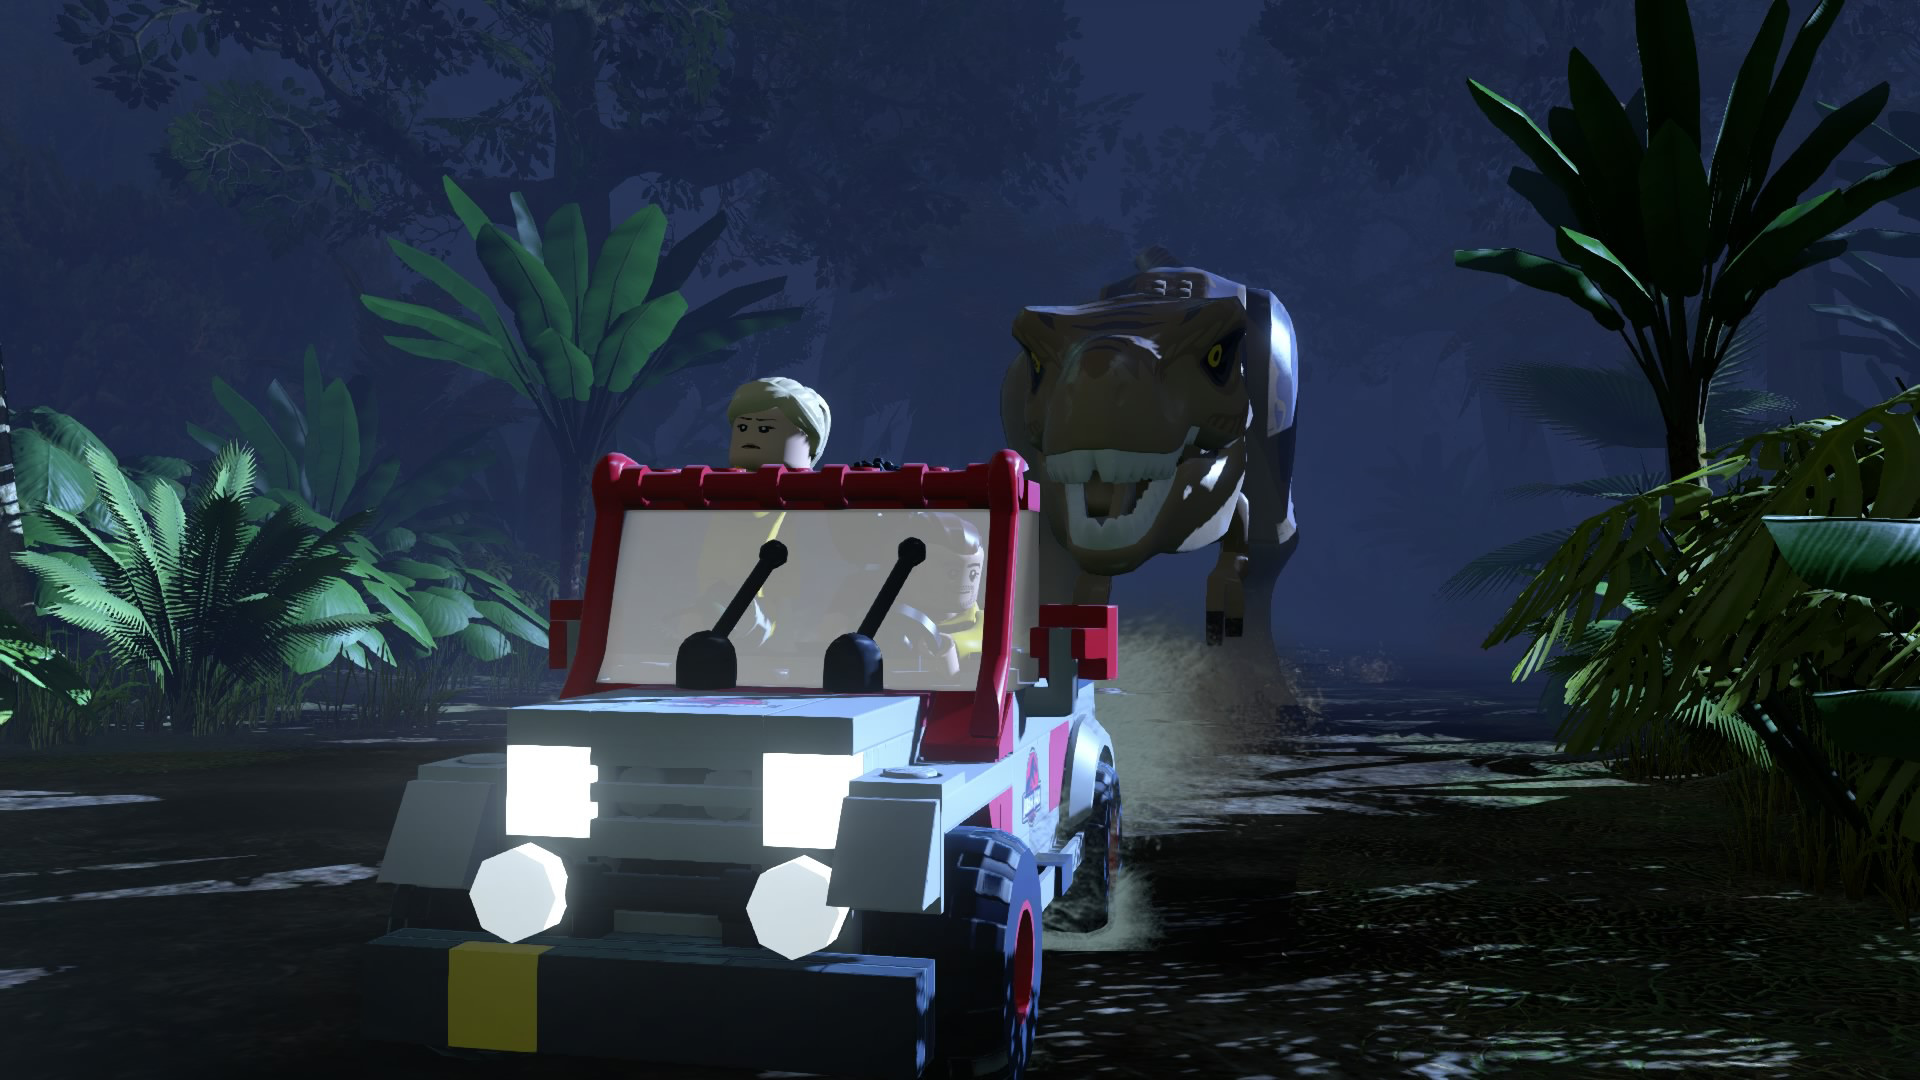 Jogo LEGO Jurassic World - PS4, Shopping